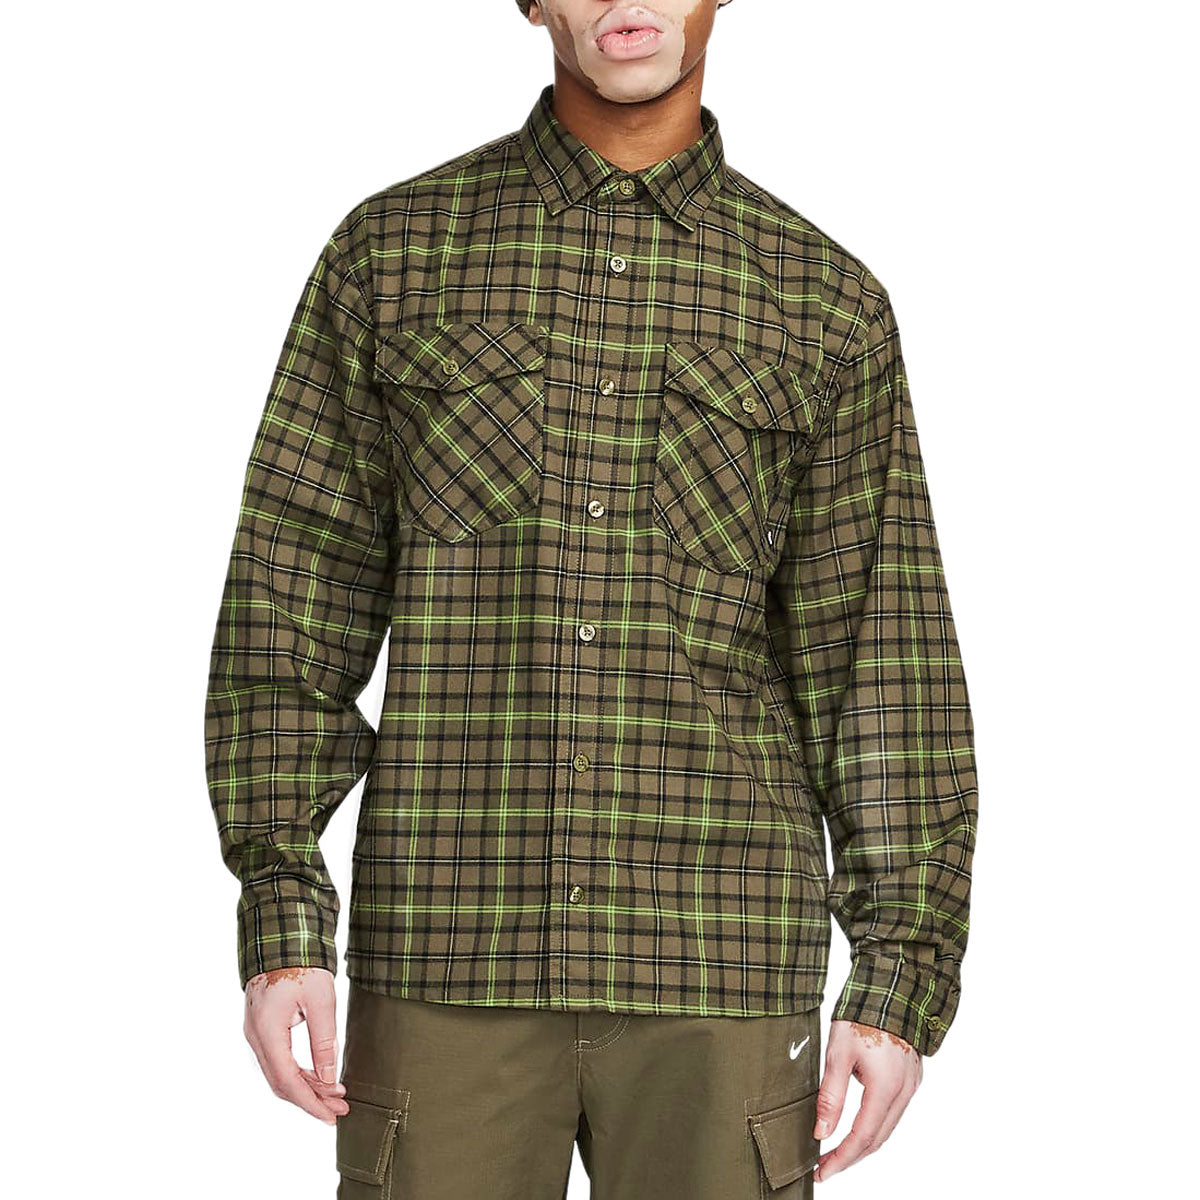 Nike SB Flannel Skate Button Up Shirt - Medium Olive/Cargo Khaki image 4